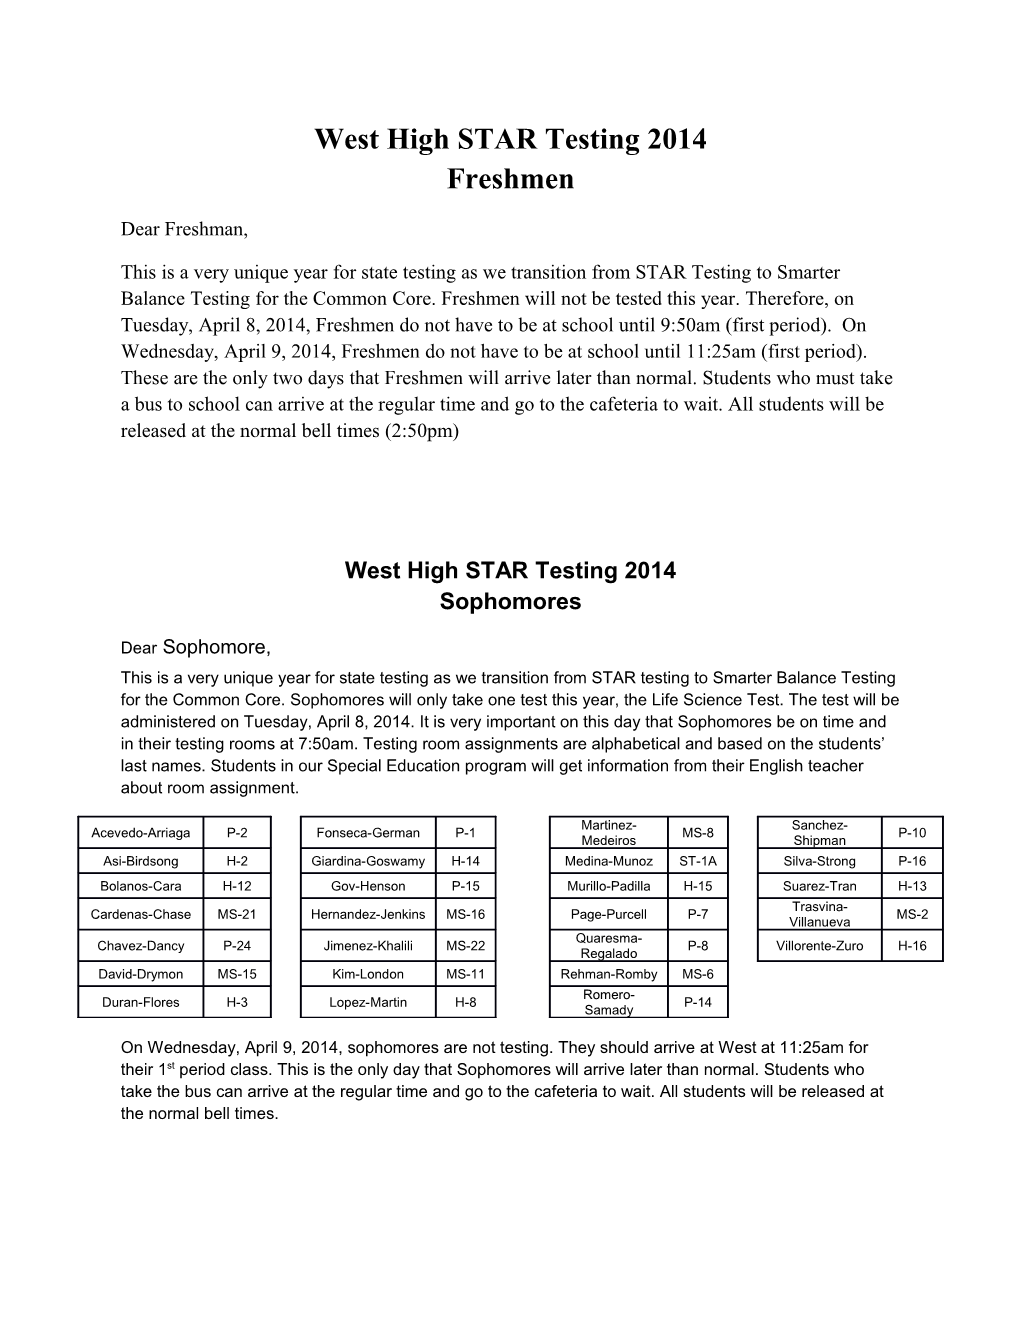 West High S TAR Testing 2014 Freshmen